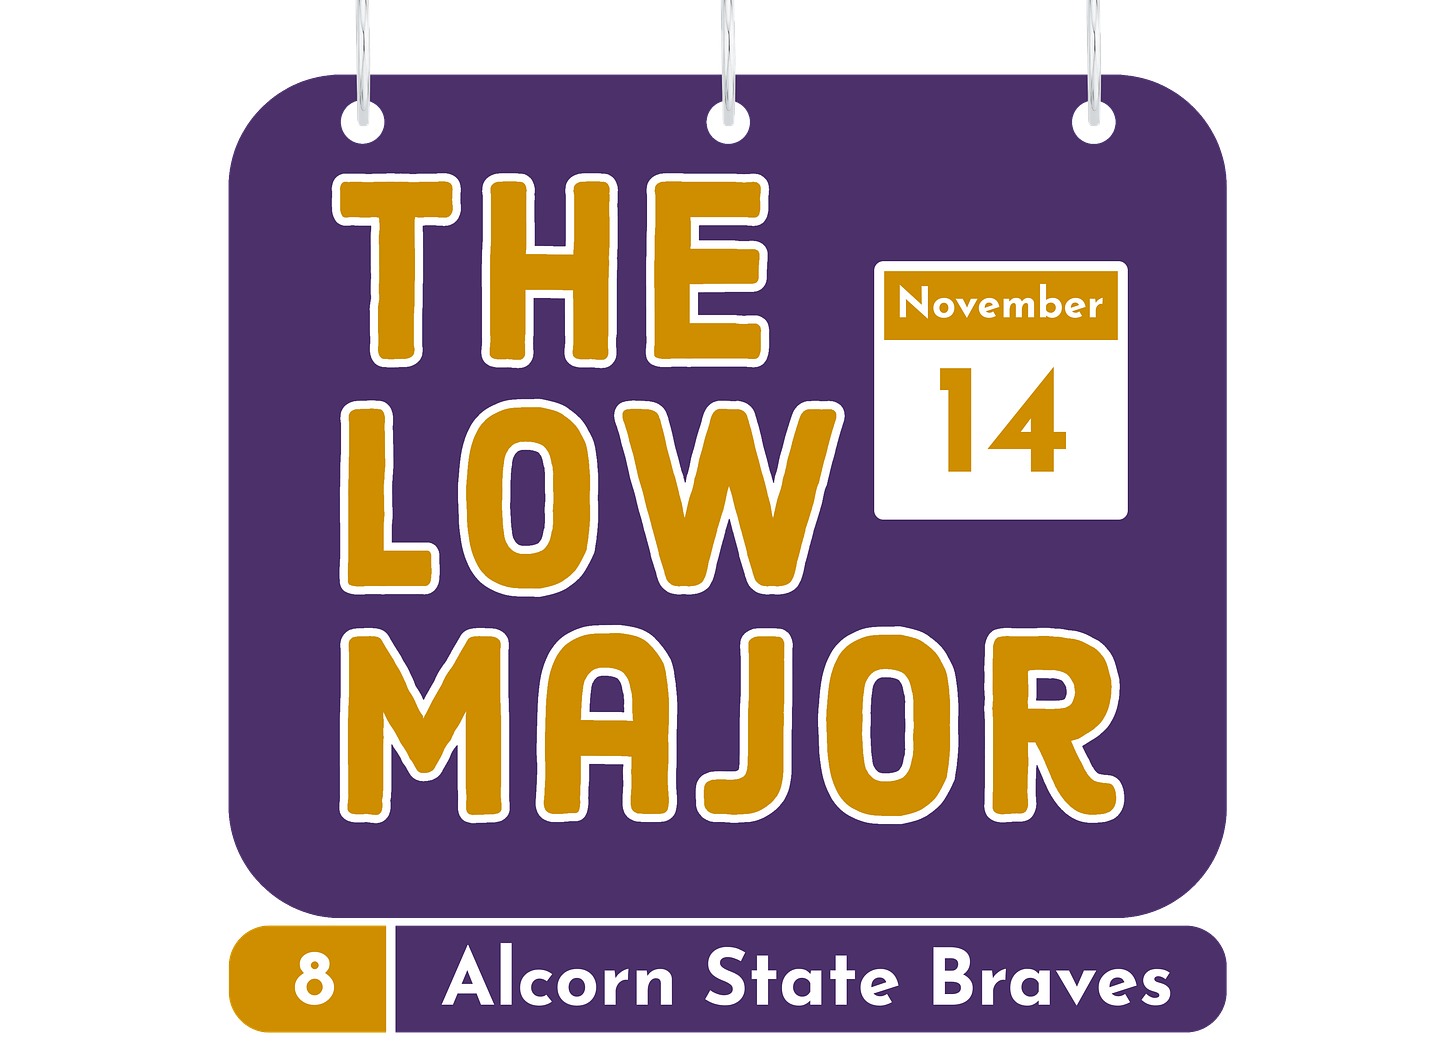 Name-a-Day Alcorn State logo